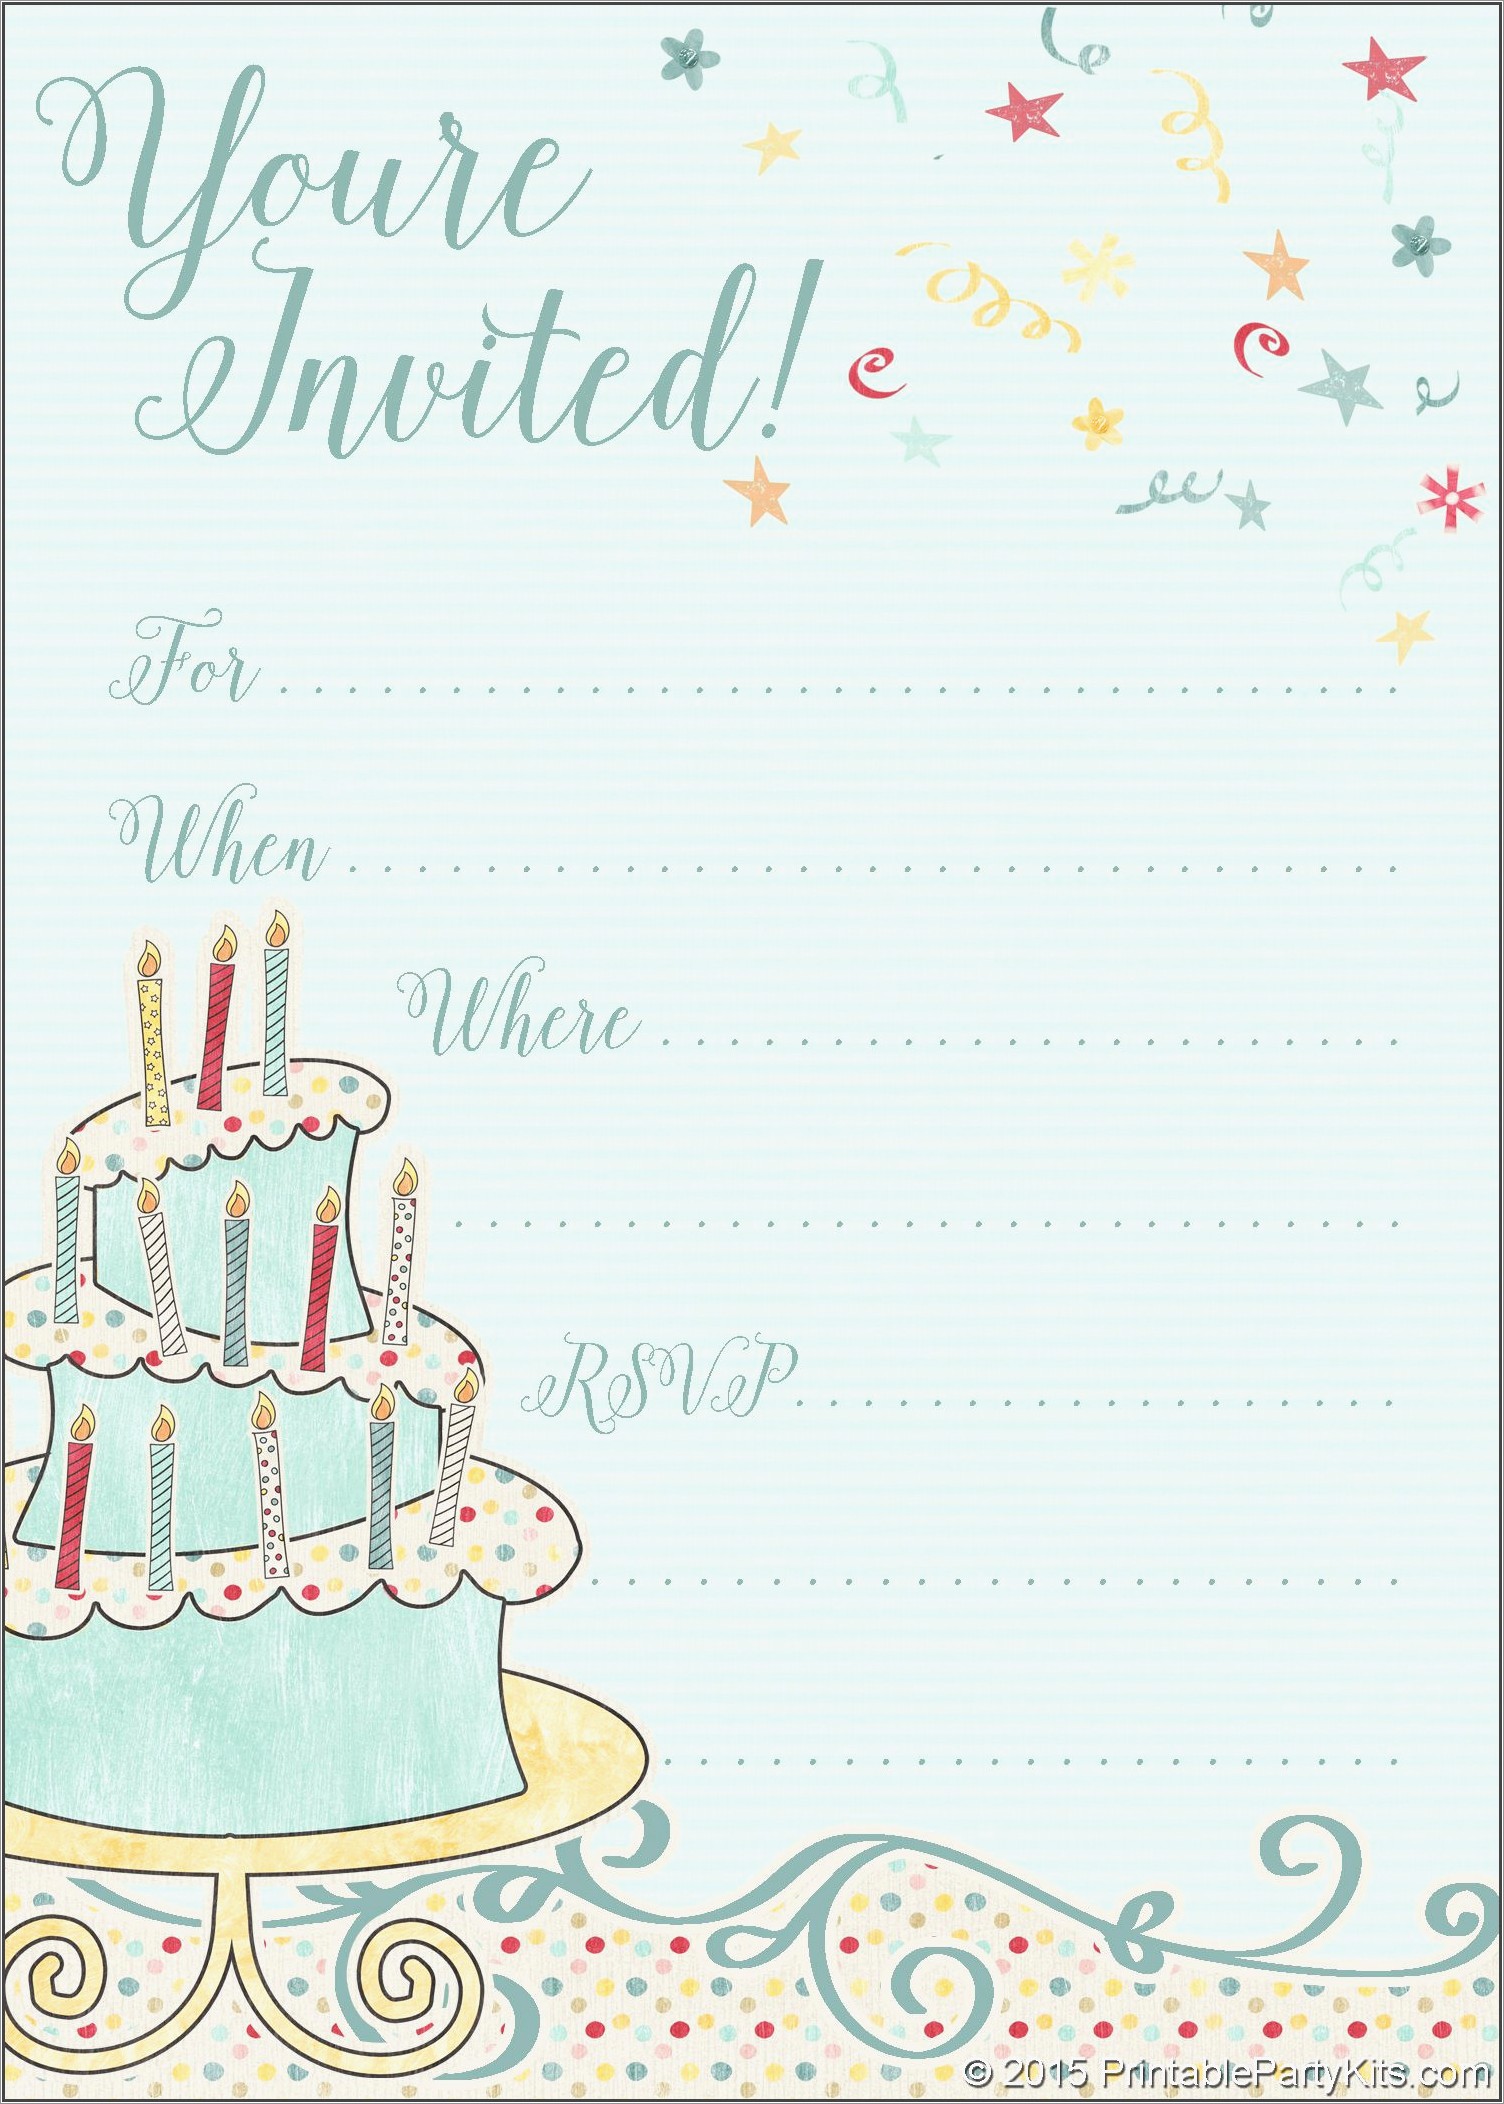 Evite Birthday Invitation Wording